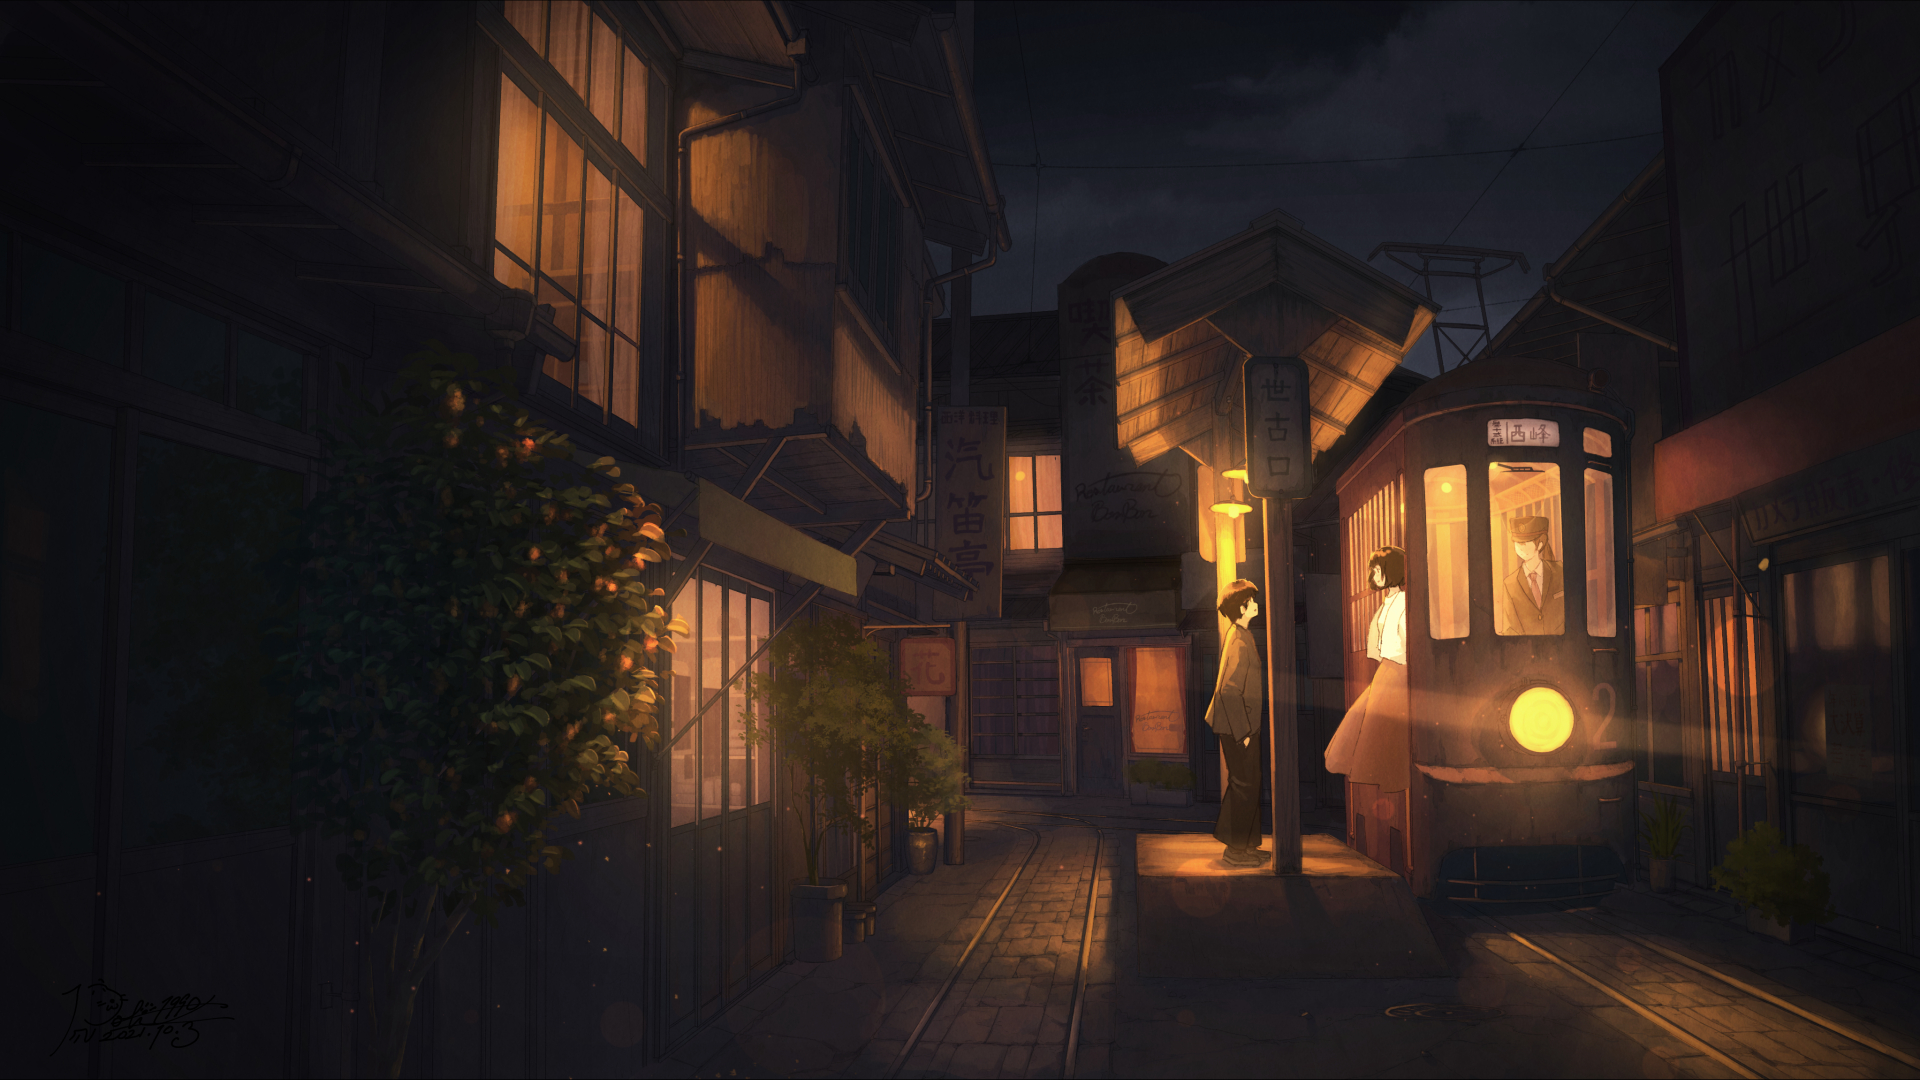 Anime City Background Images - Free Download on Freepik